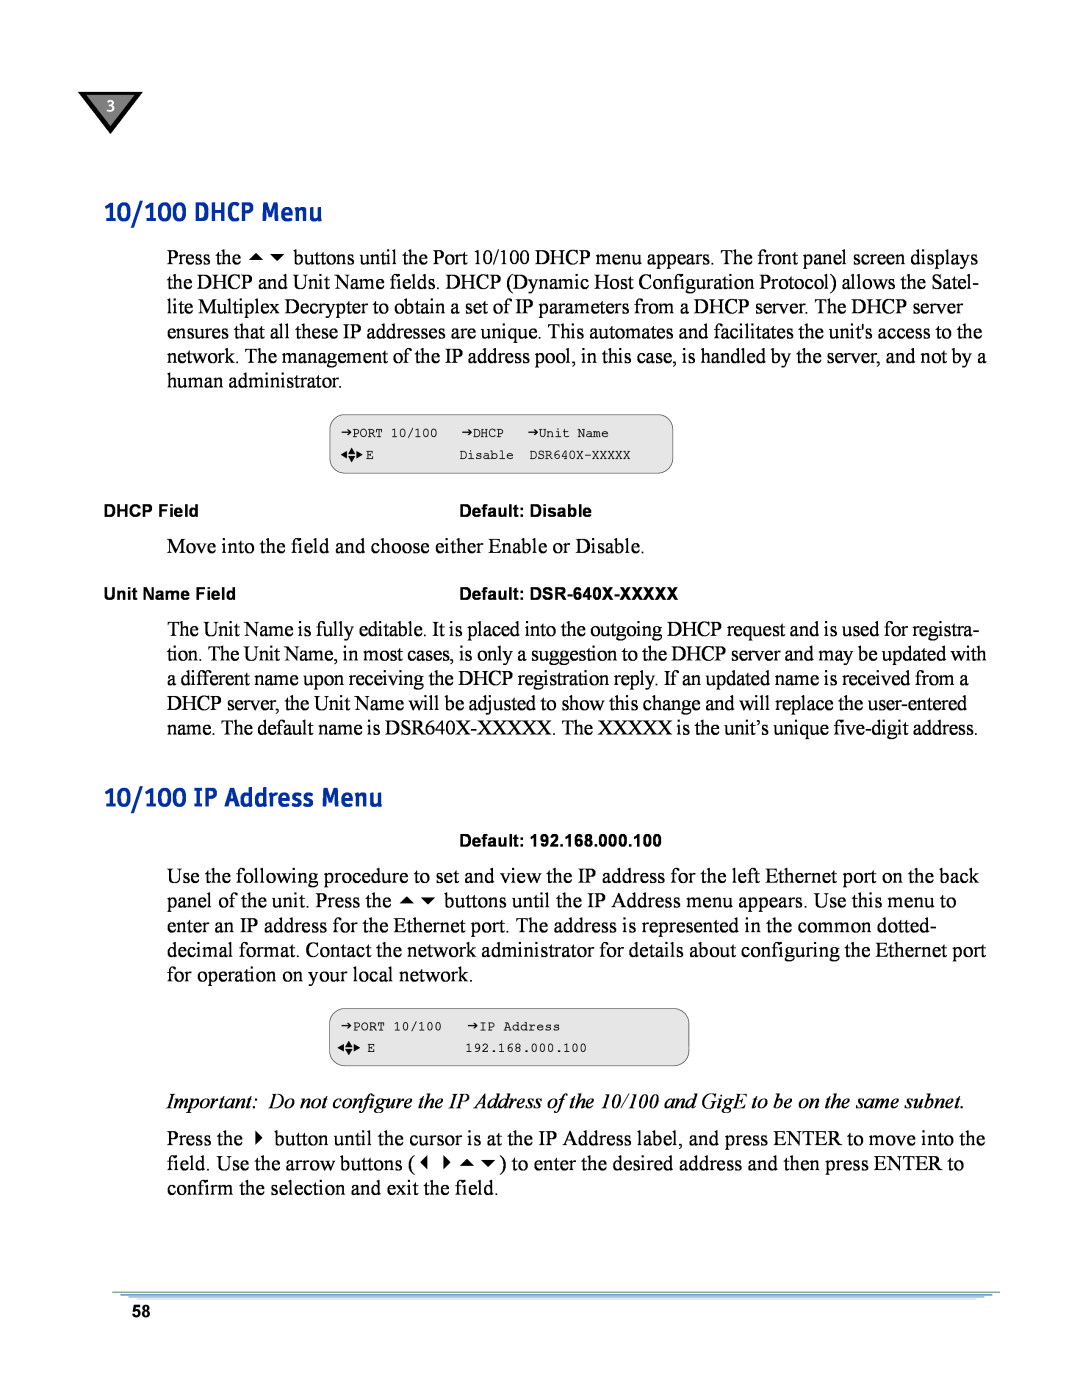 Motorola DSR-6400 manual 10/100 DHCP Menu, 10/100 IP Address Menu, DHCP Field, Default Disable, Unit Name Field 